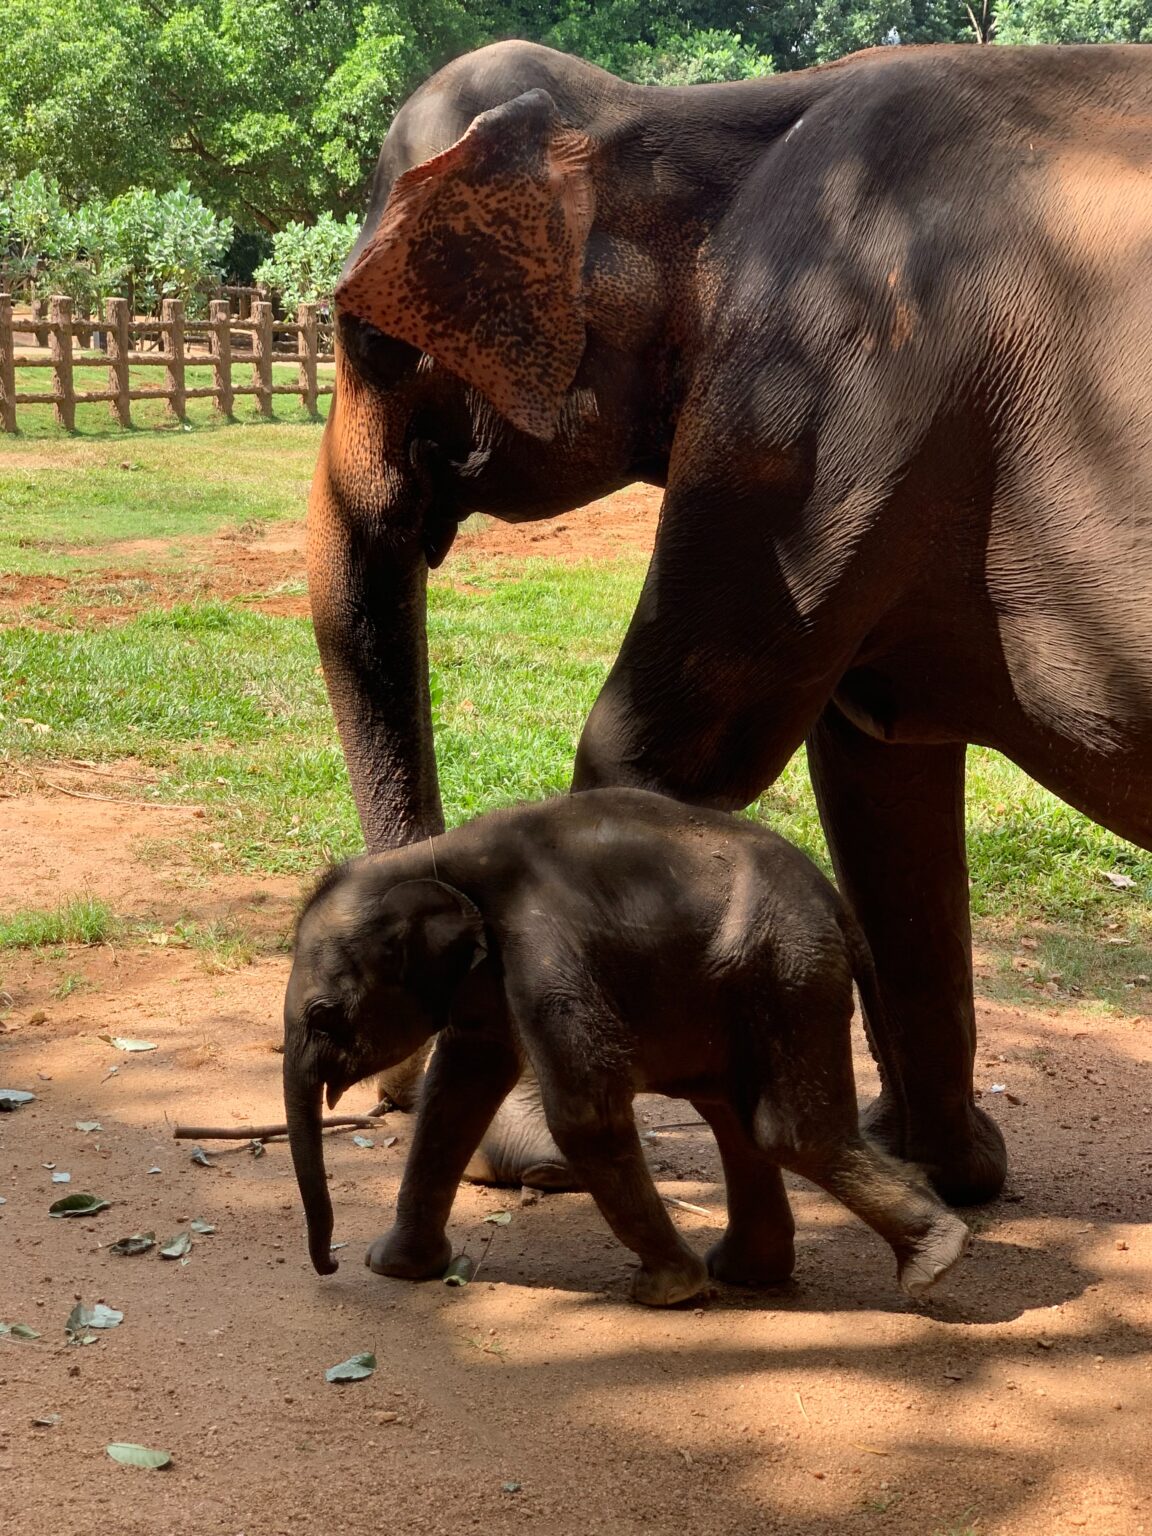 Sri Lankan elephants in the luxury safari holidays tours to Sri Lanka.